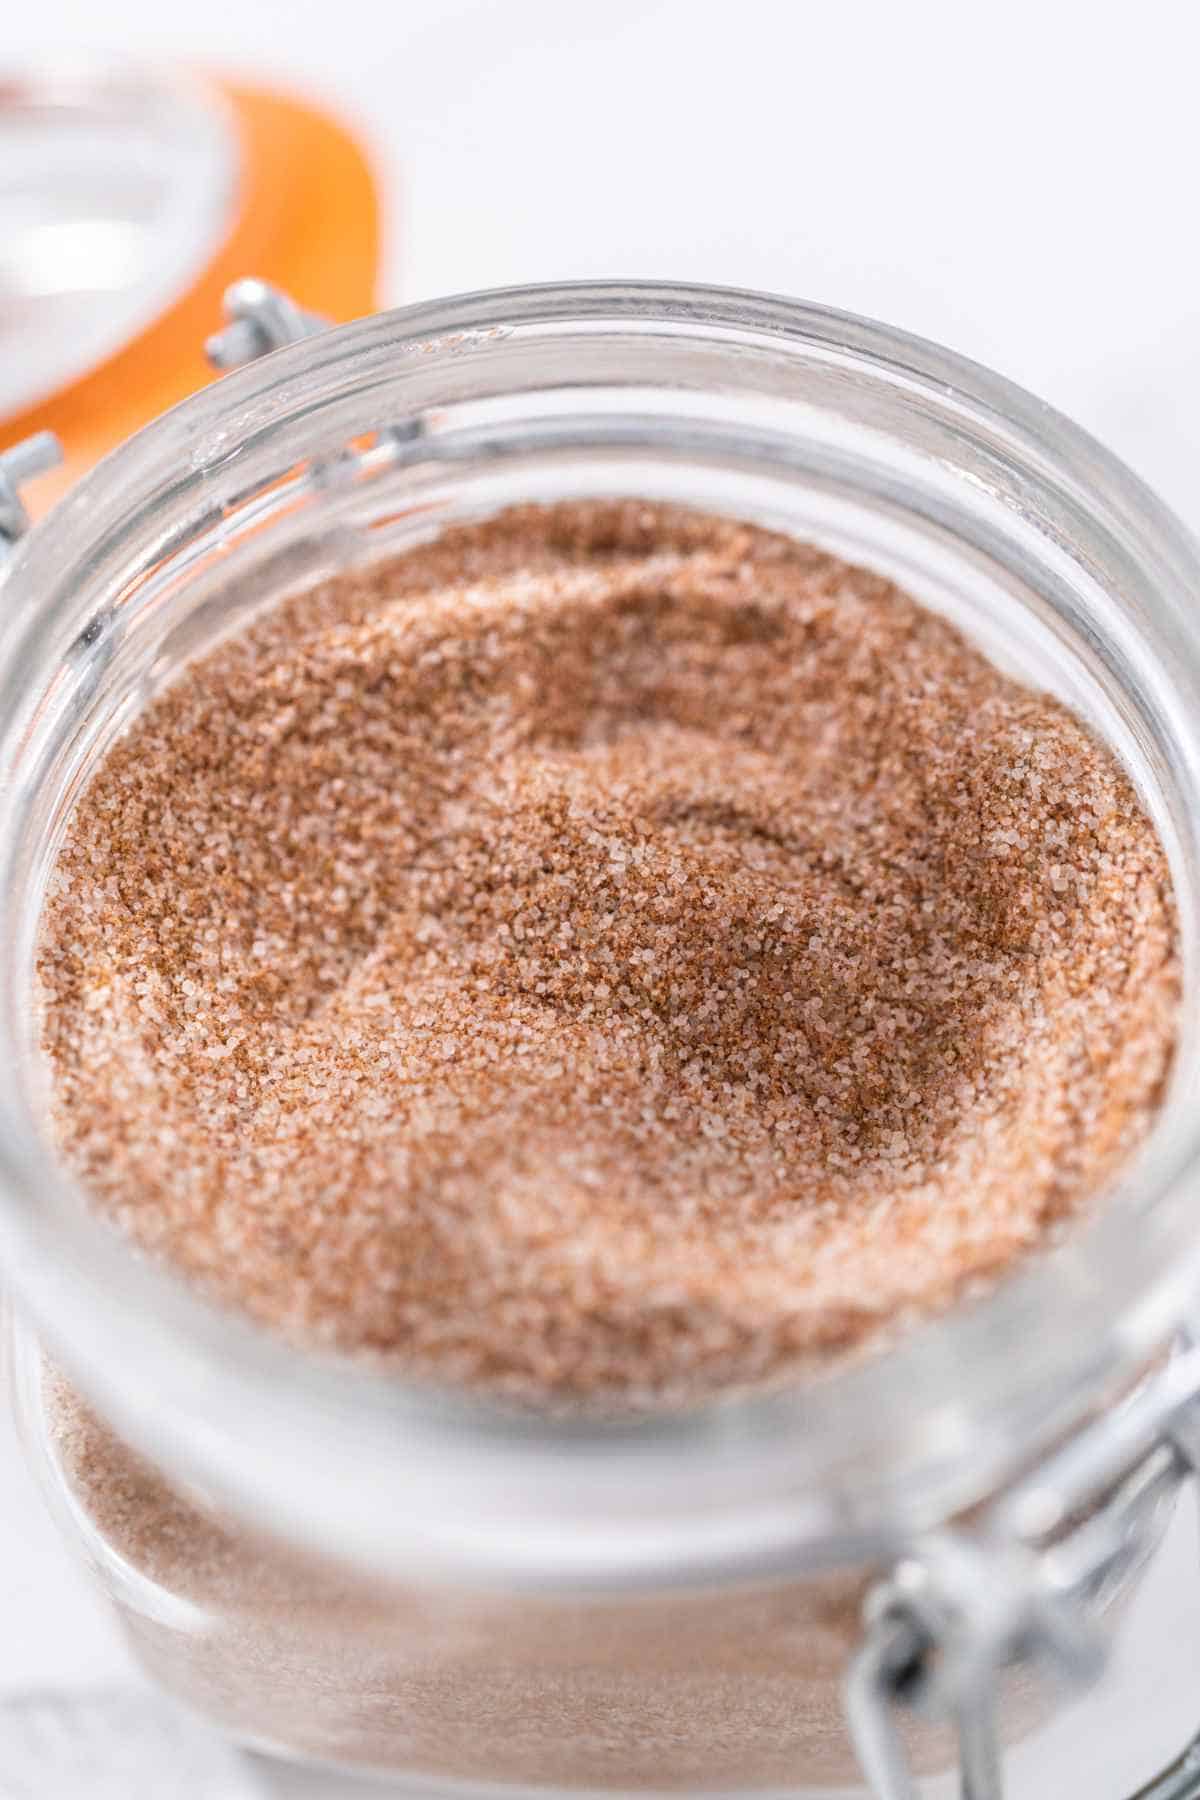 Cinnamon sugar in a glass mason jar on the marble surface.